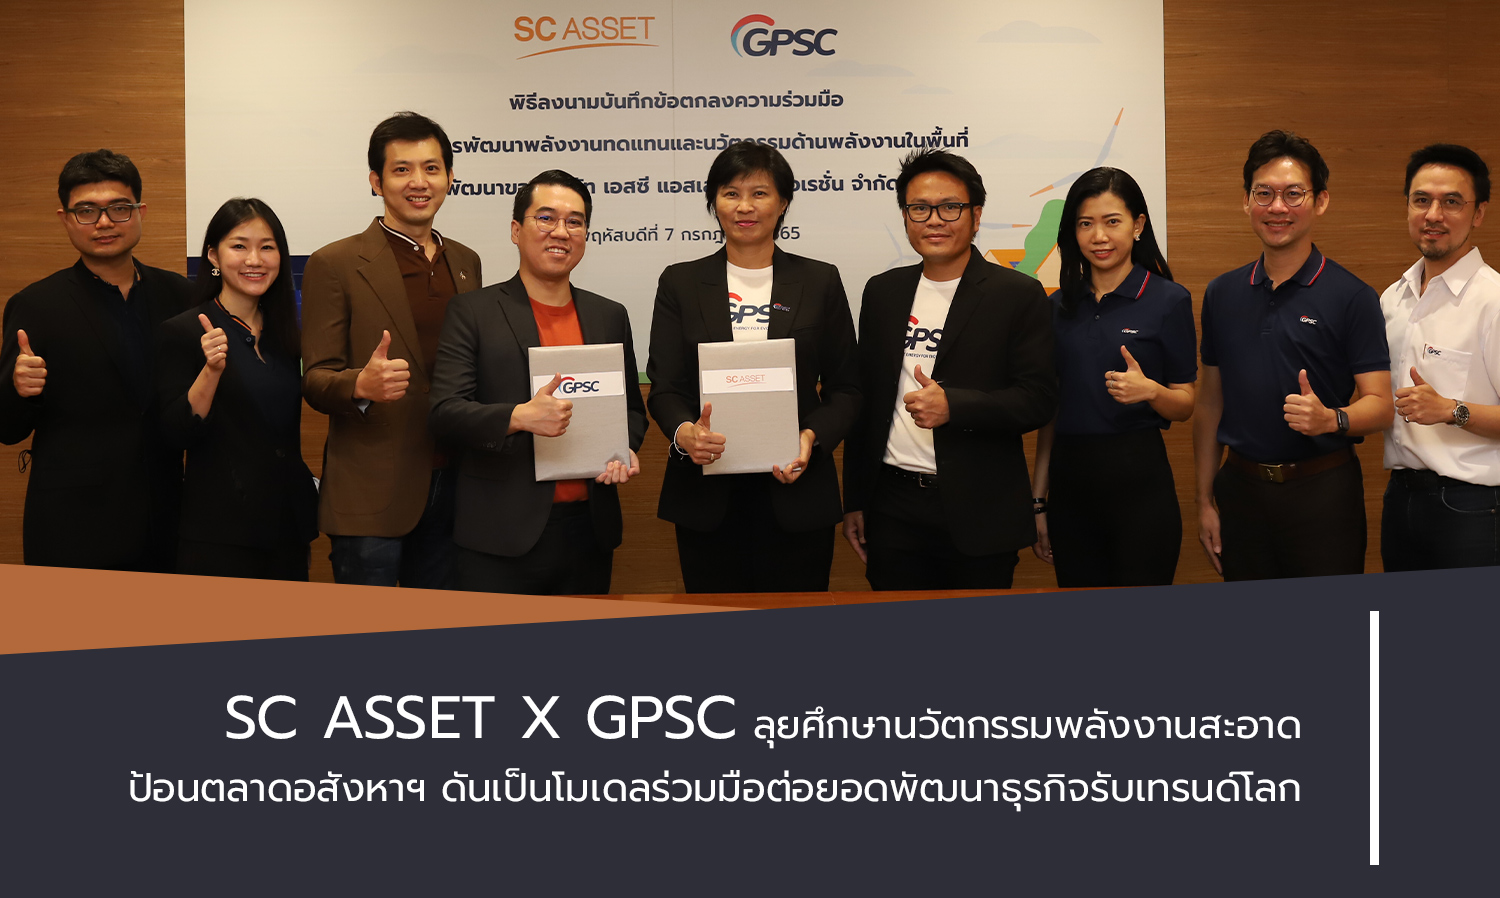 SC Asset x GPSC ลุยศึกษานวัตกรรมพลังงานสะอาด ป้อนตลาดอสังหาฯ ดันเป็นโมเดลร่วมมือต่อยอดพัฒนาธุรกิจรับเทรนด์โลก